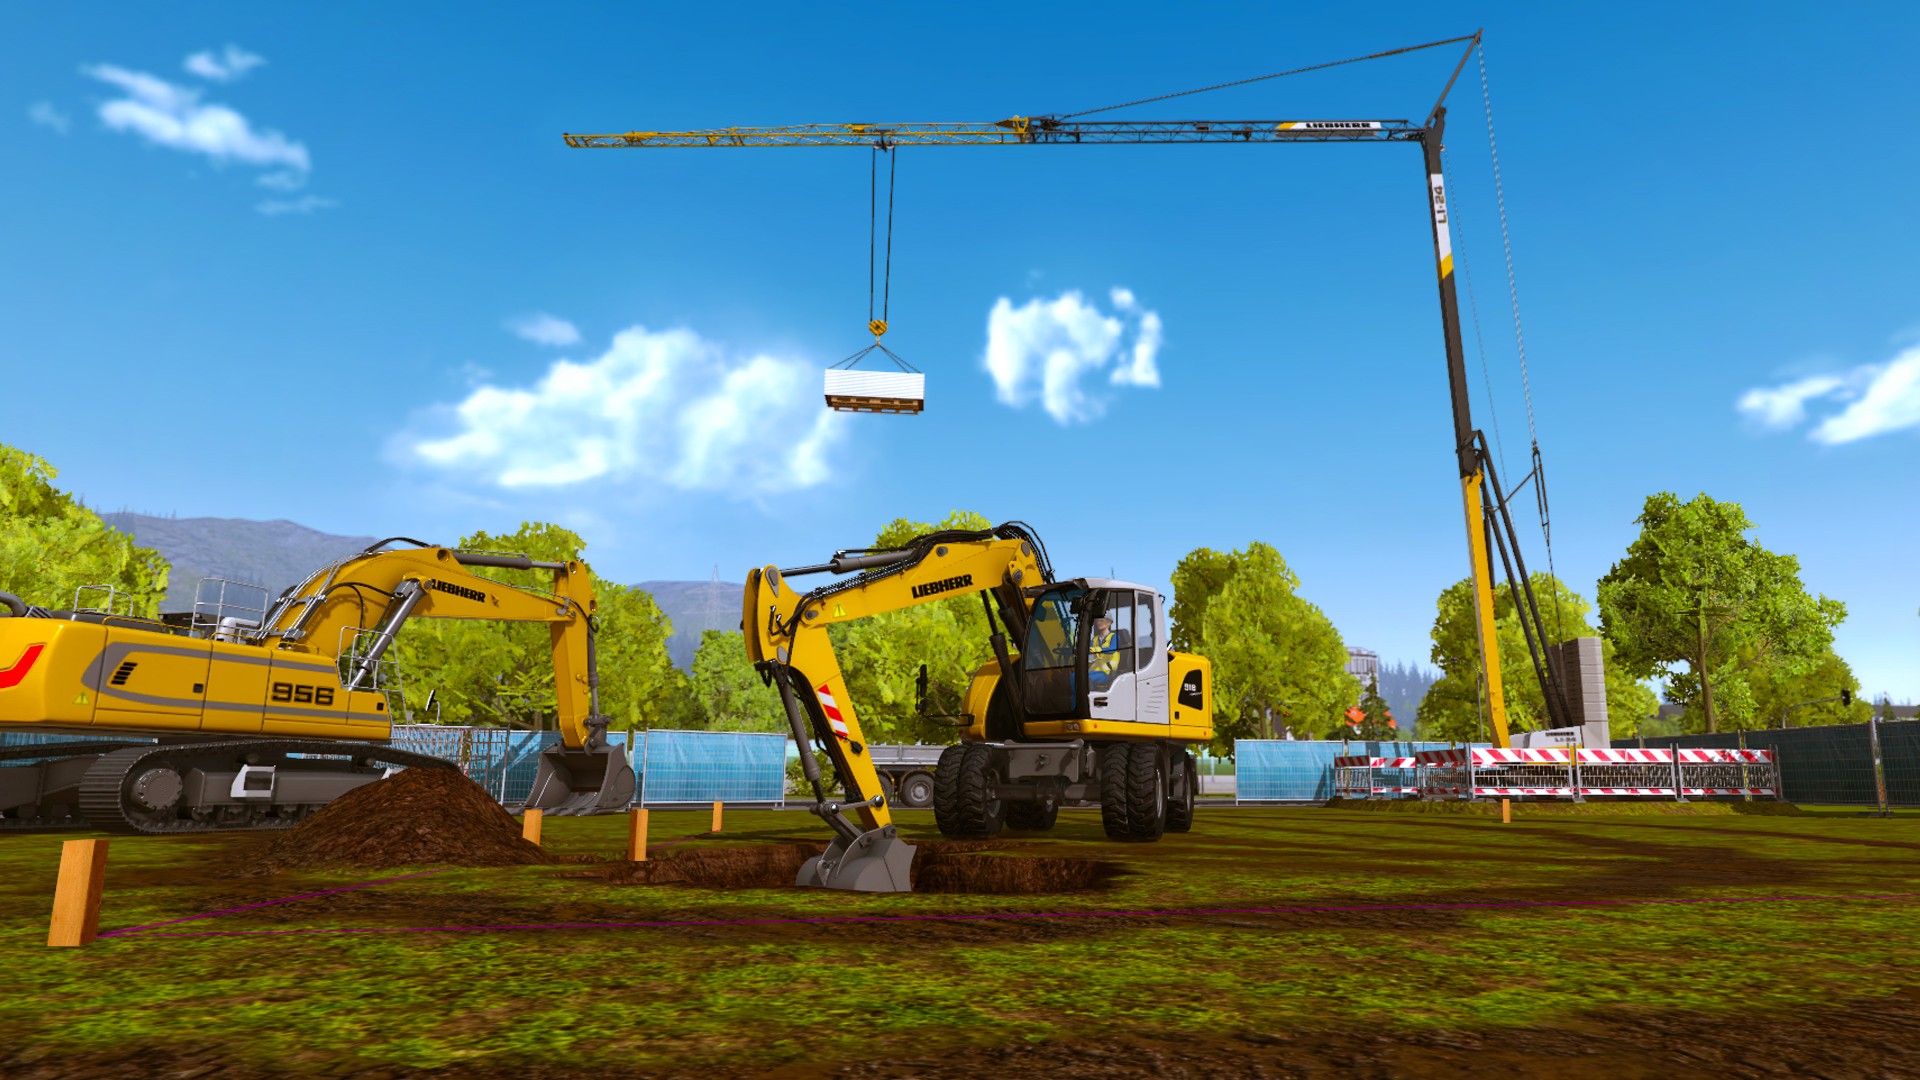 Bau Simulator 2015 Key - Construction Steam PC Download Code